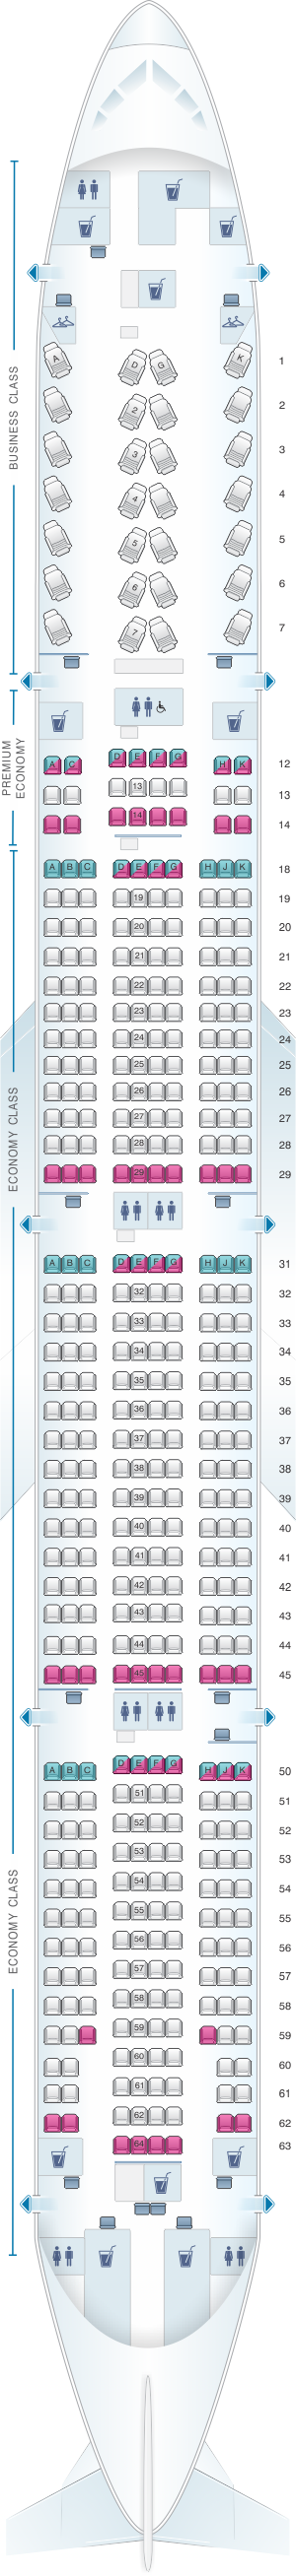 Seat Map Air Canada Boeing B Er W International Layout